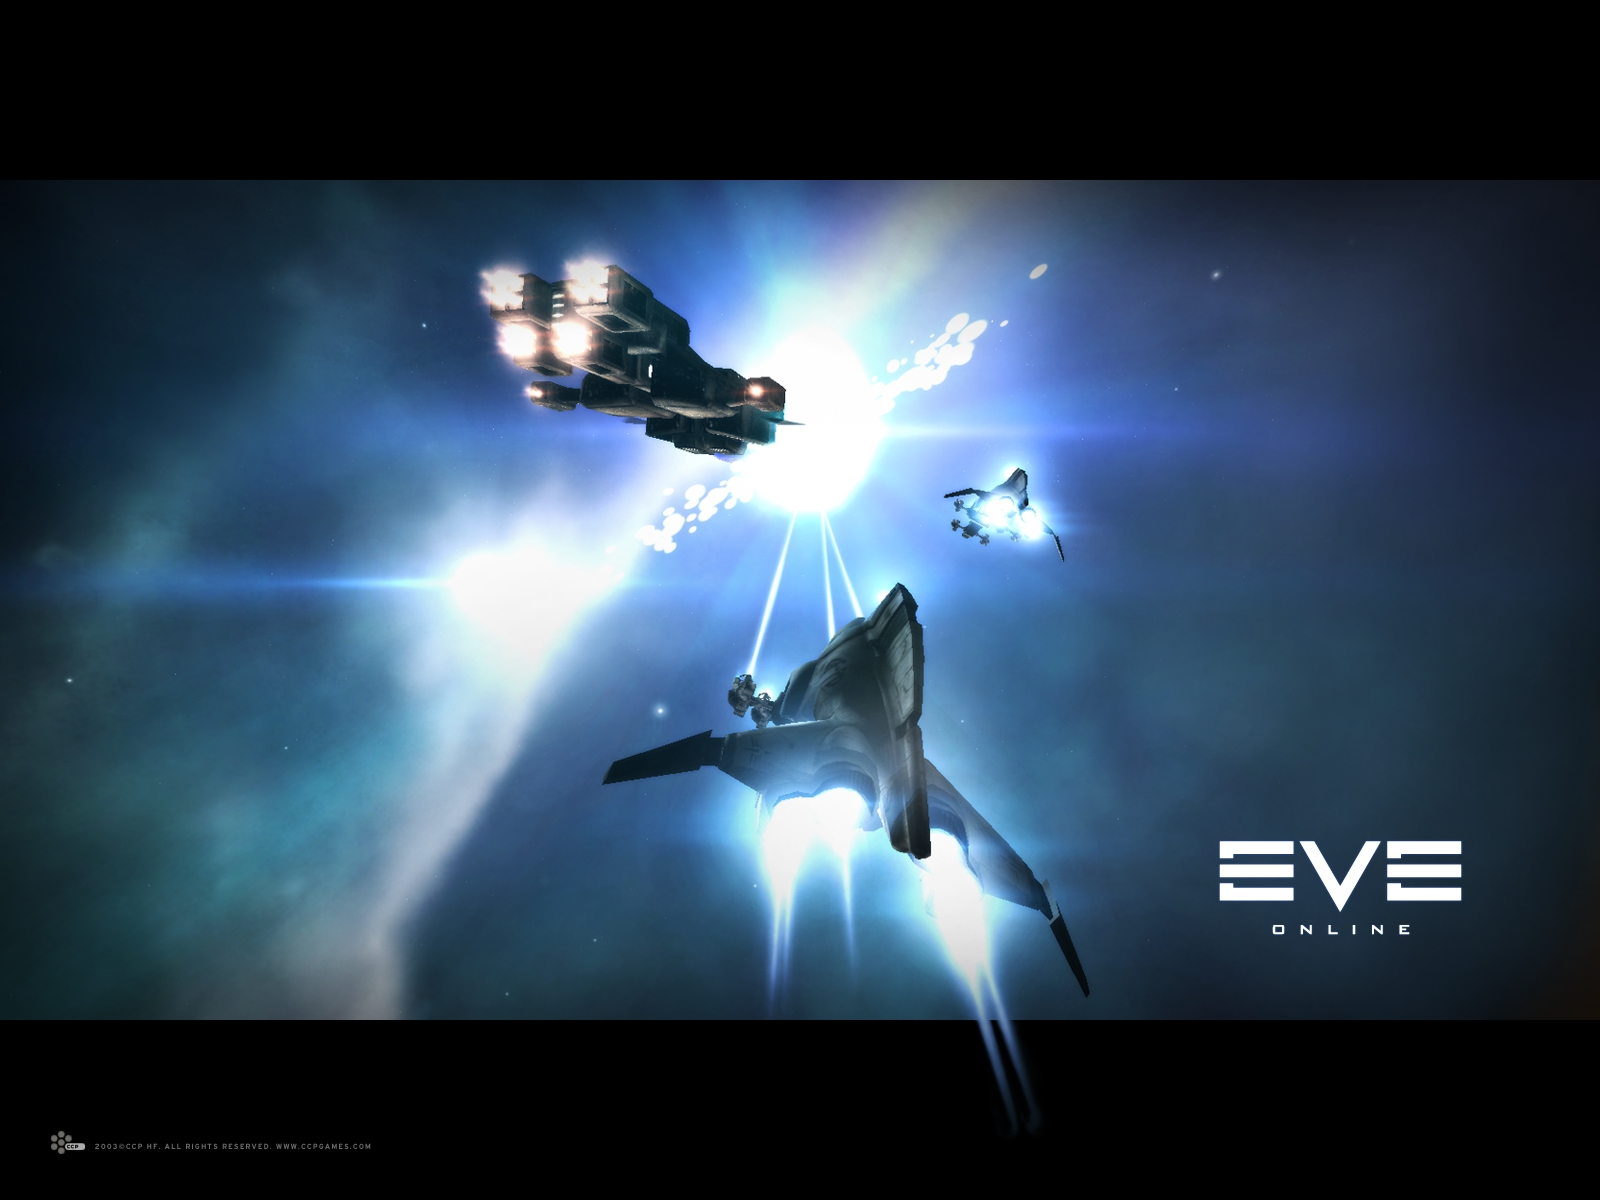 Eve Online Wallpaper Stock Photos